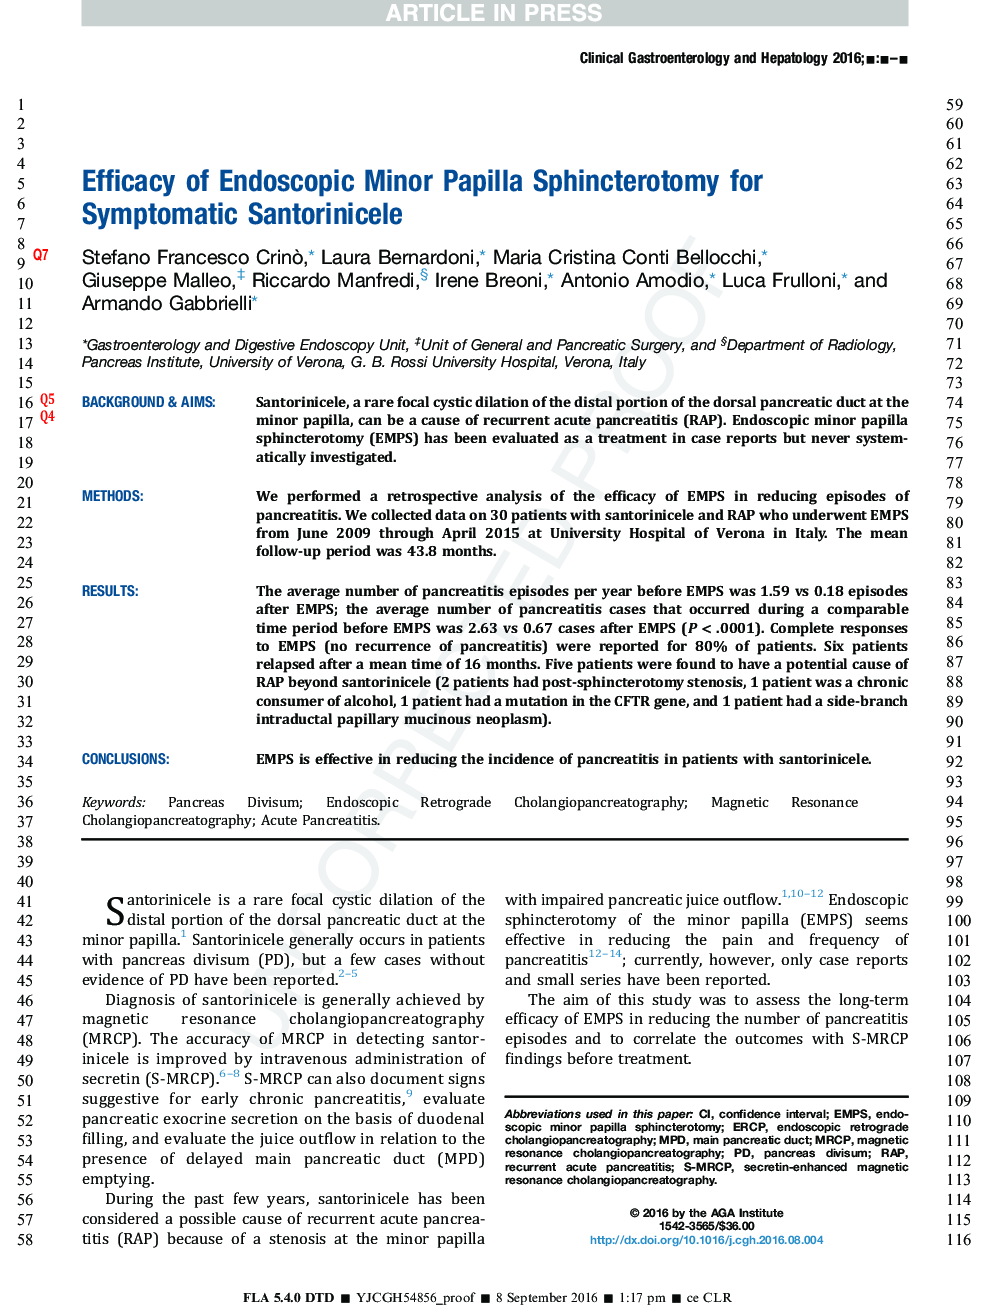 Efficacy of Endoscopic Minor Papilla Sphincterotomy for Symptomatic Santorinicele